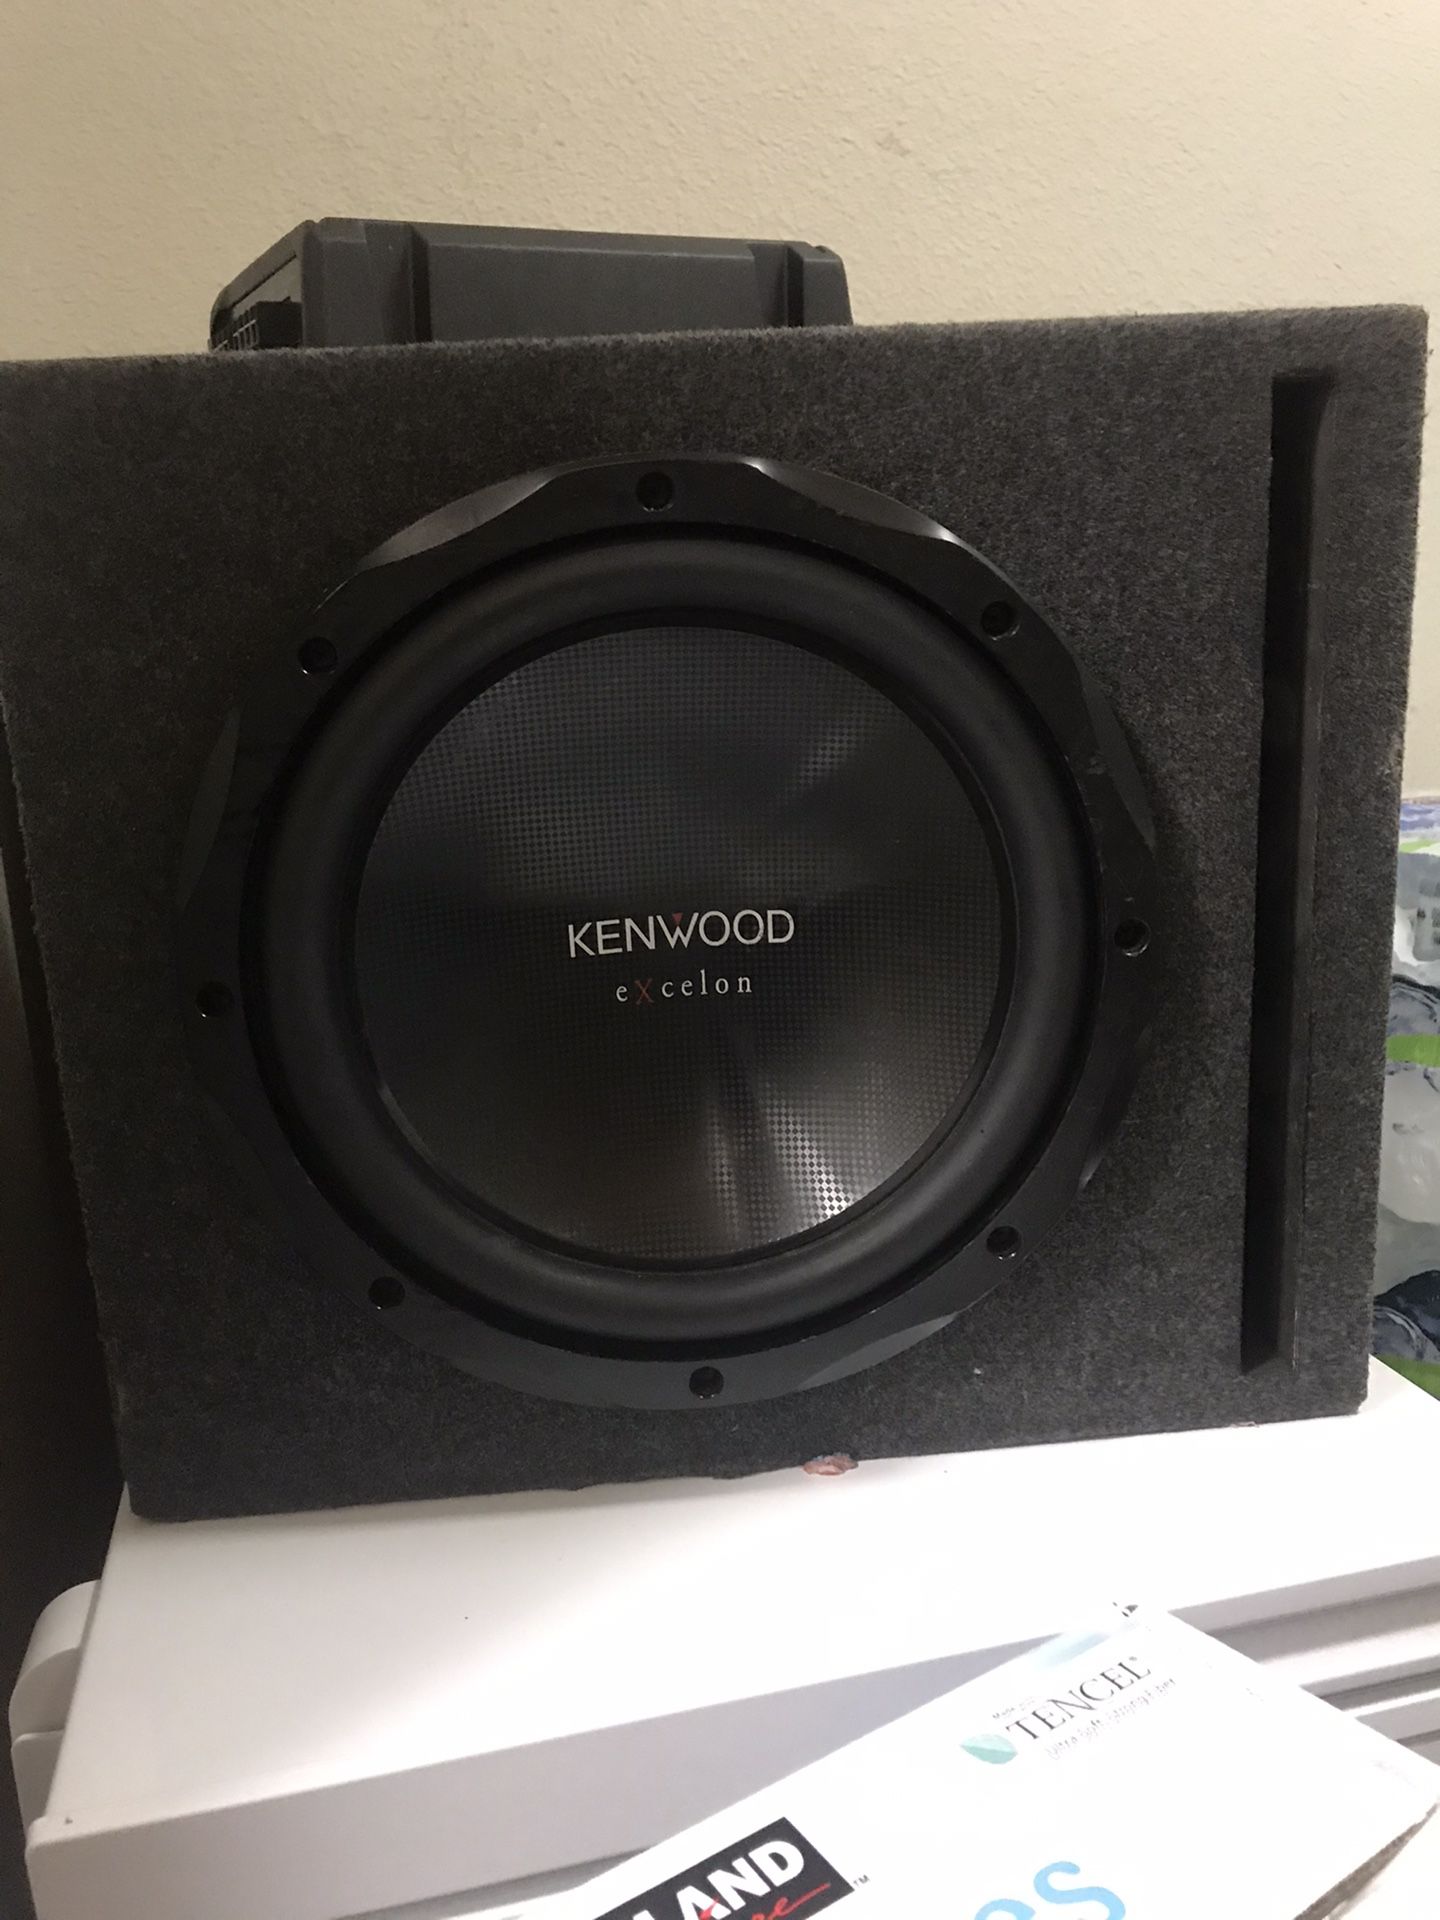 Kenwood excelon 12” sub and 400 watt amplifier